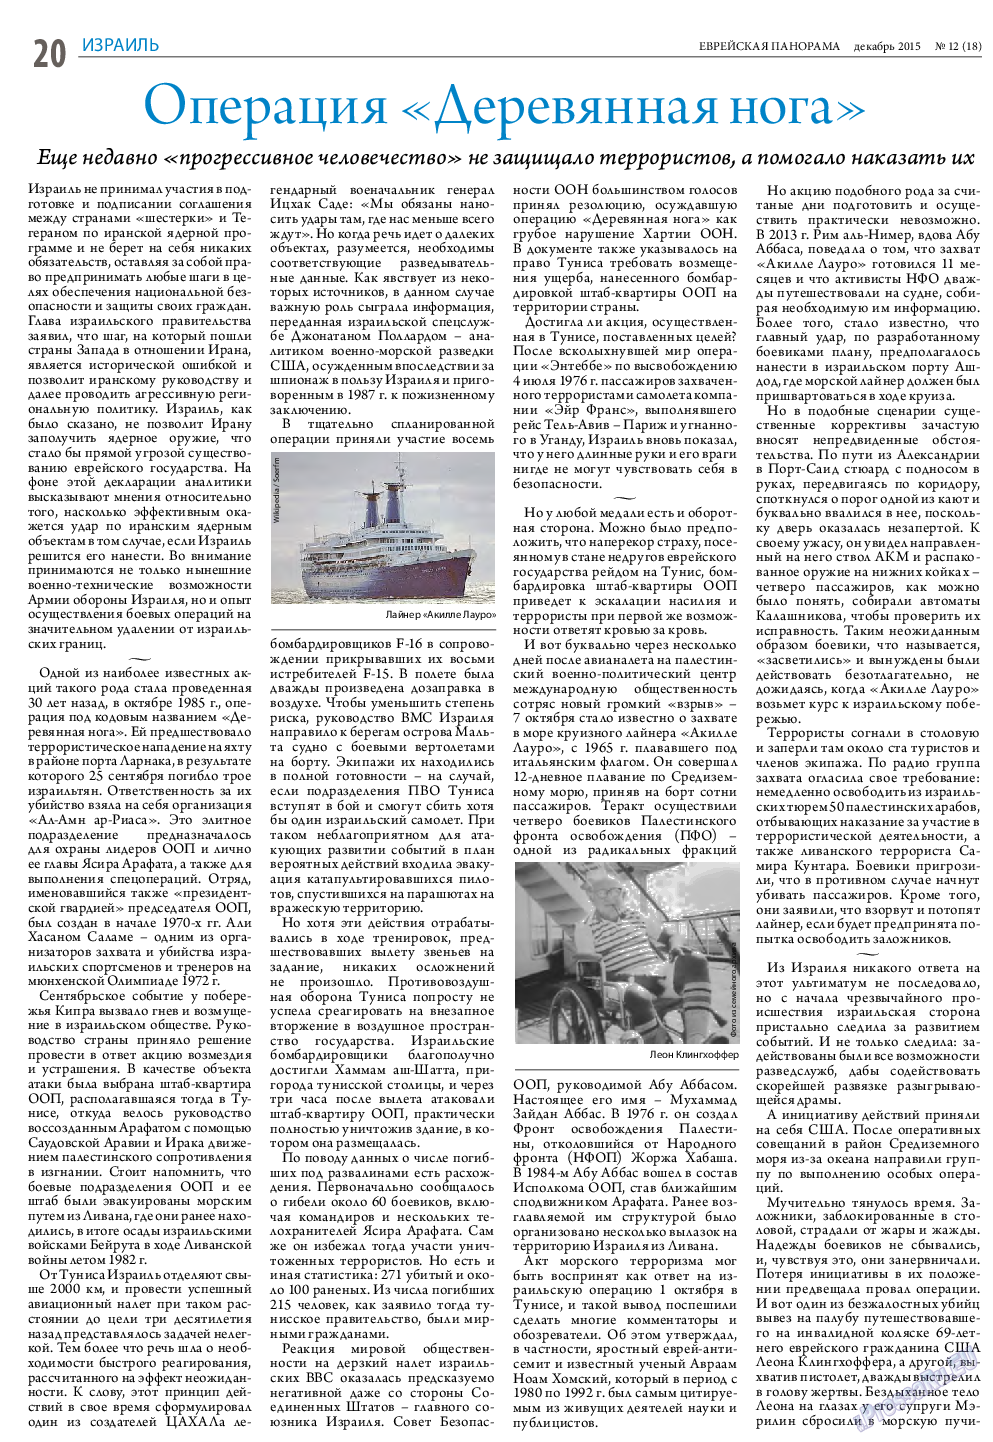 Еврейская панорама, газета. 2015 №12 стр.20